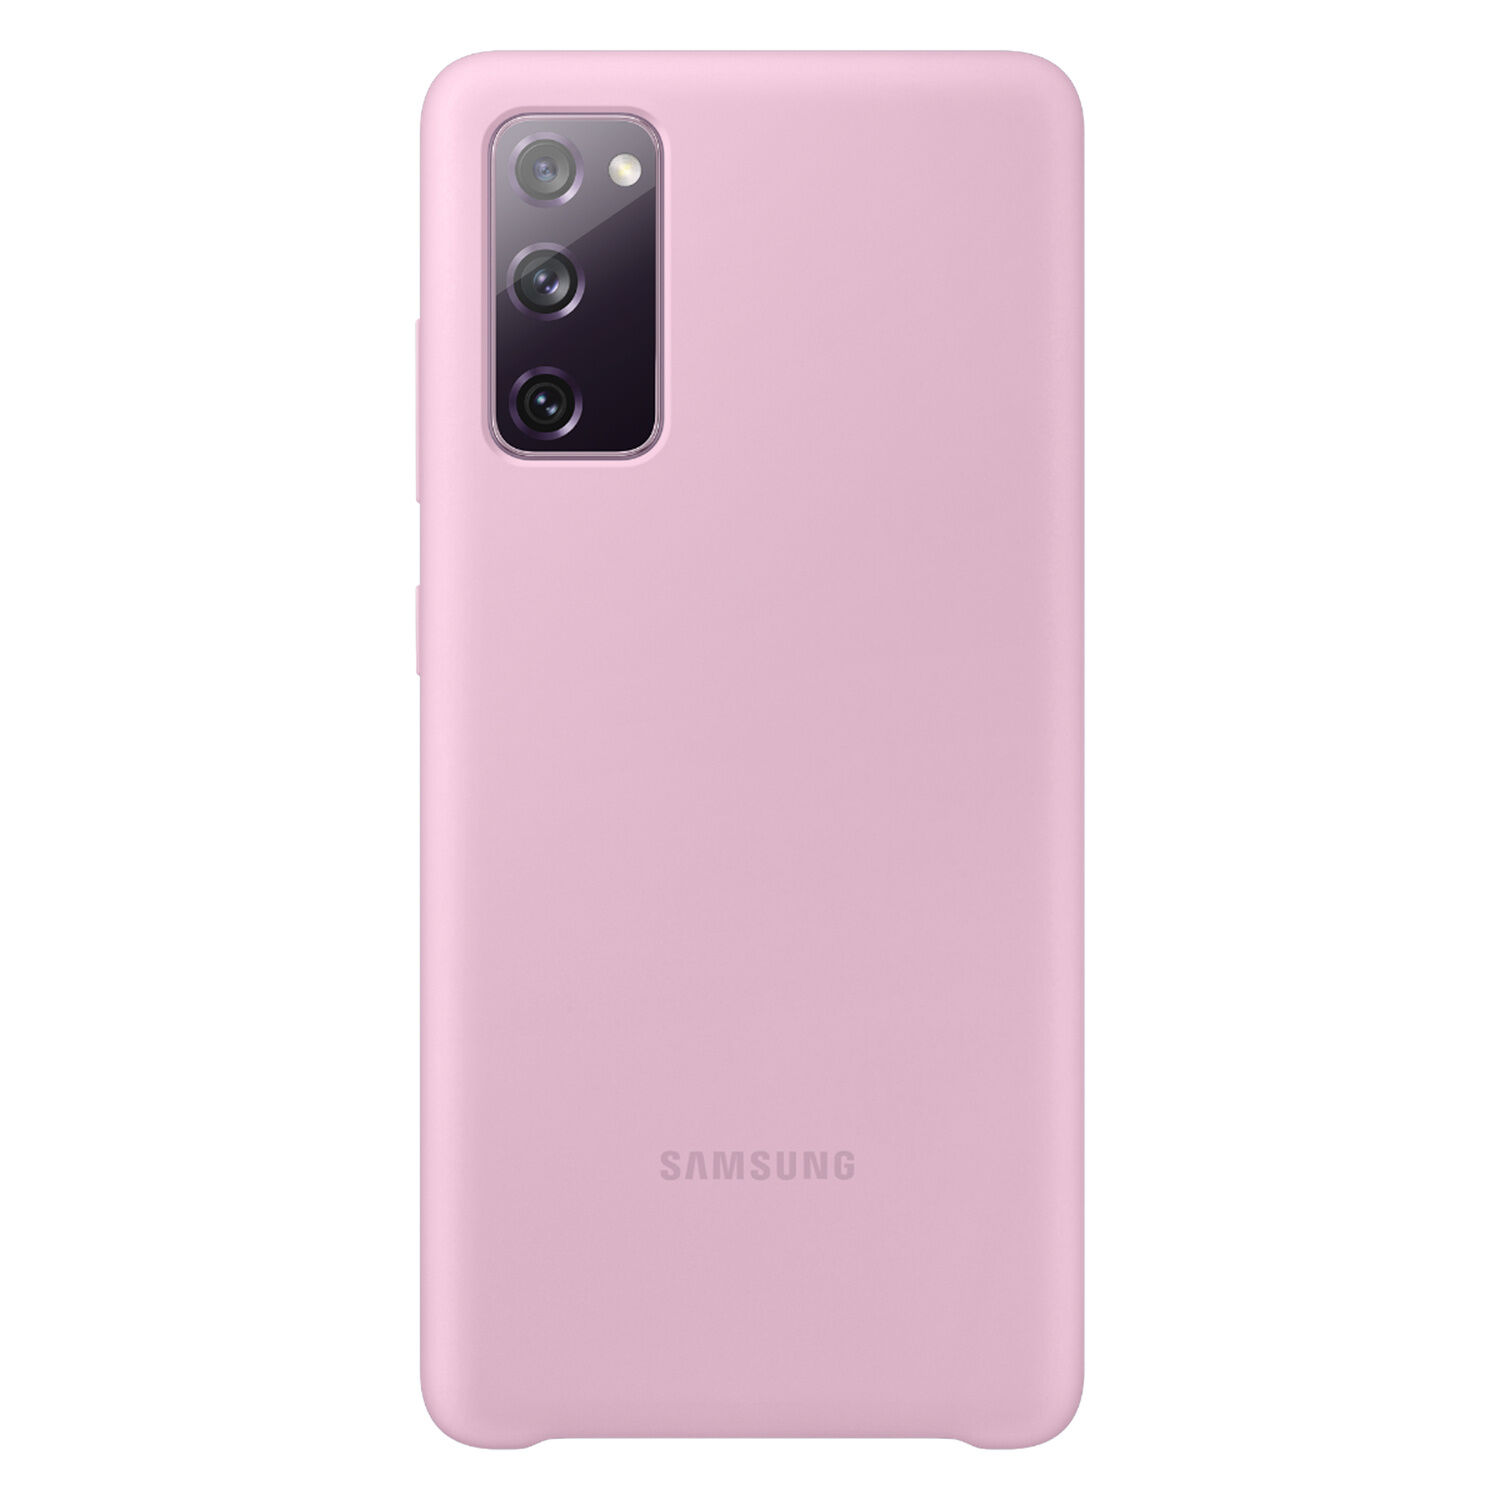 Samsung Coque en silicone pour le Galaxy S20 FE - Rose